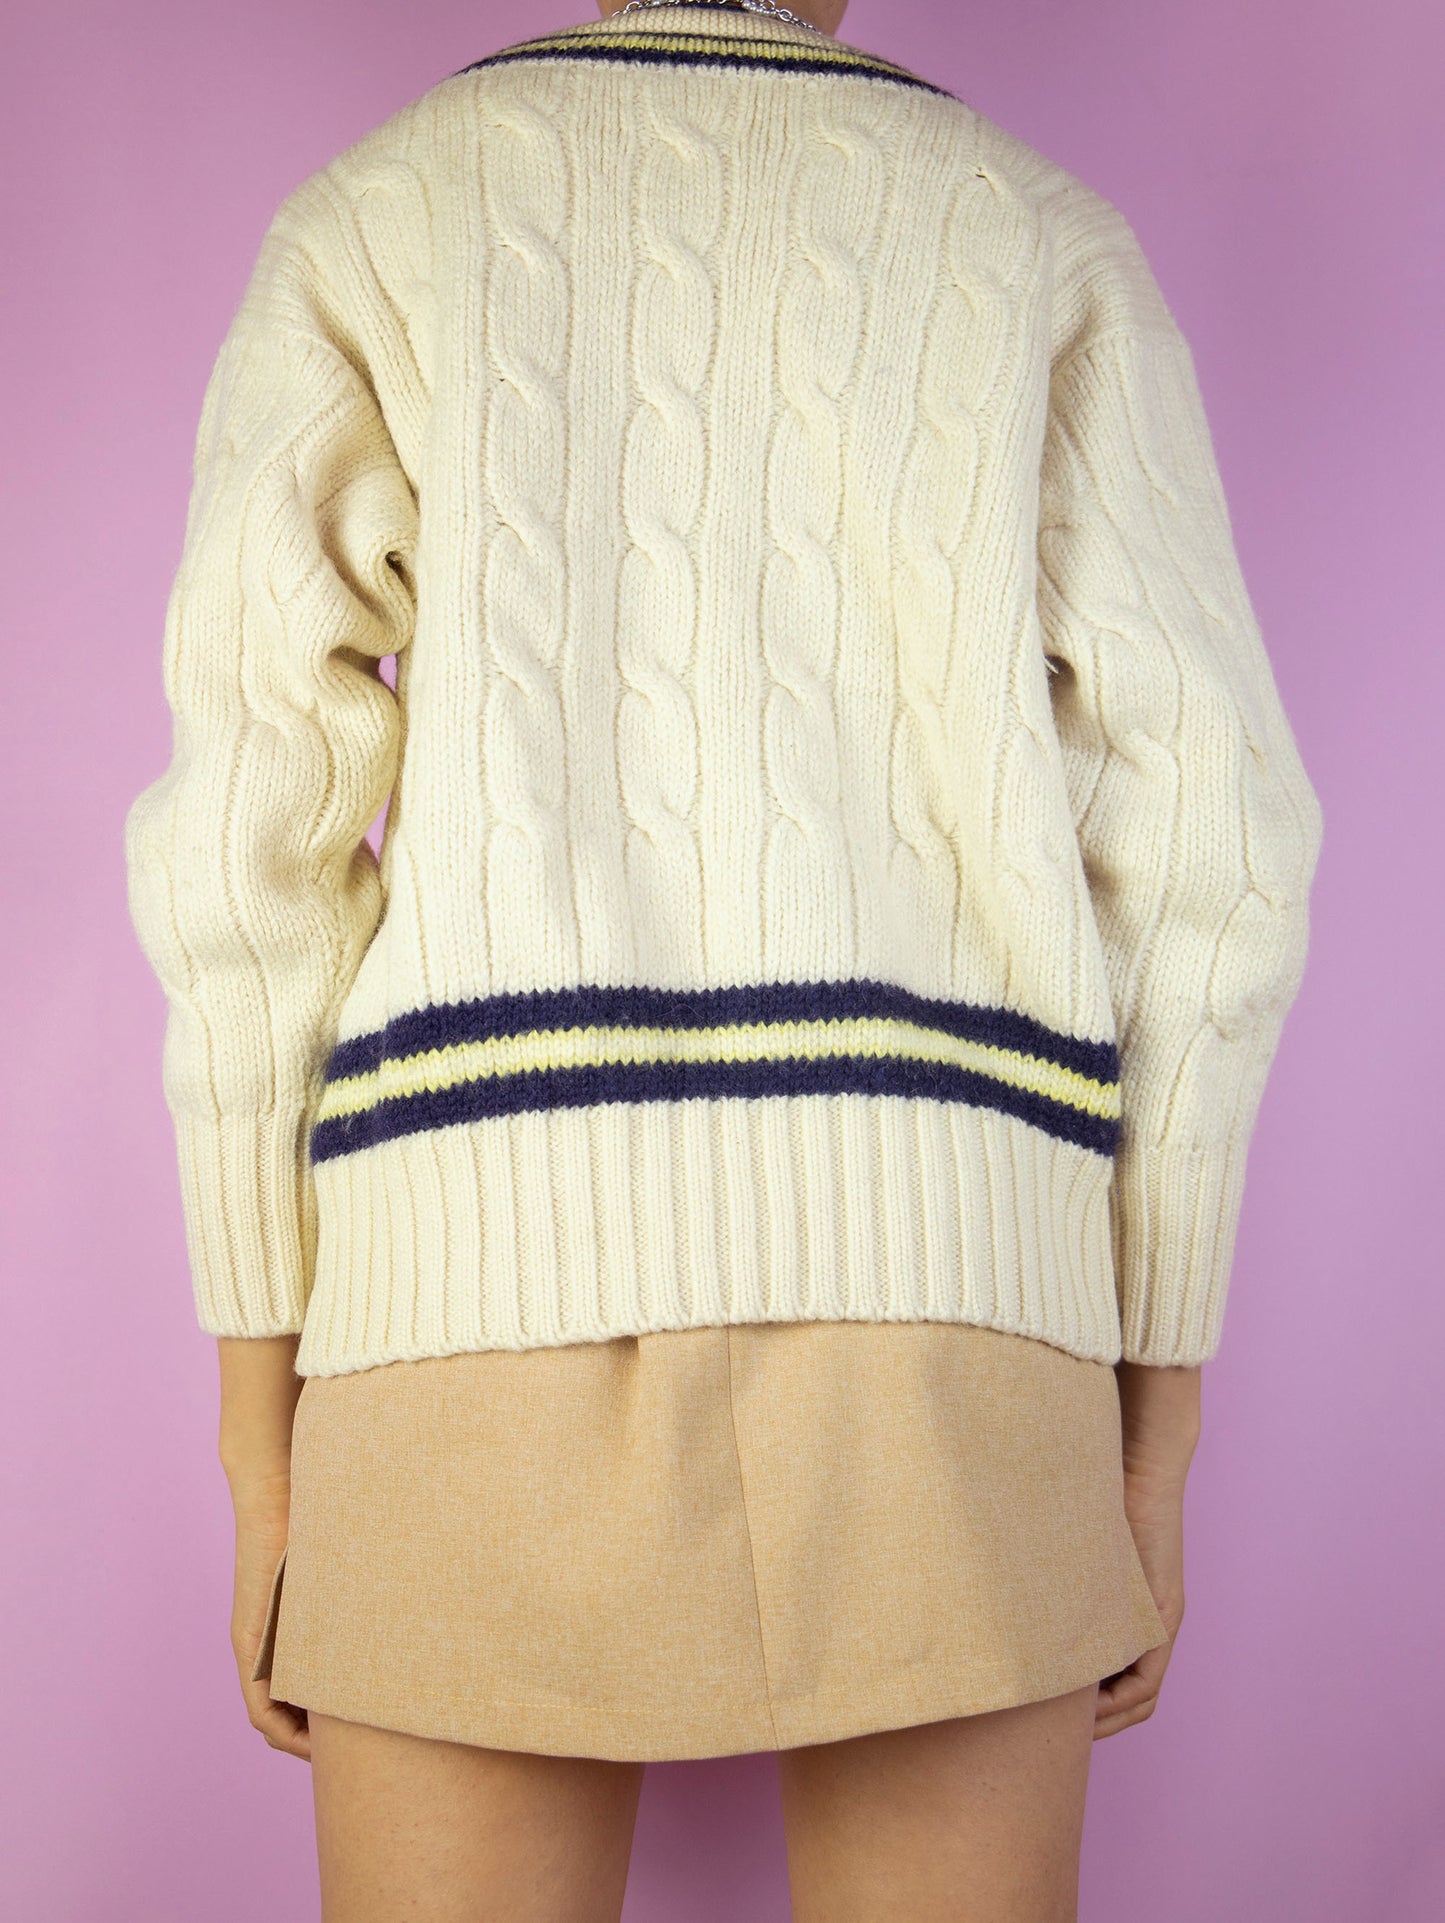 Vintage 90s Beige School Sweater - M